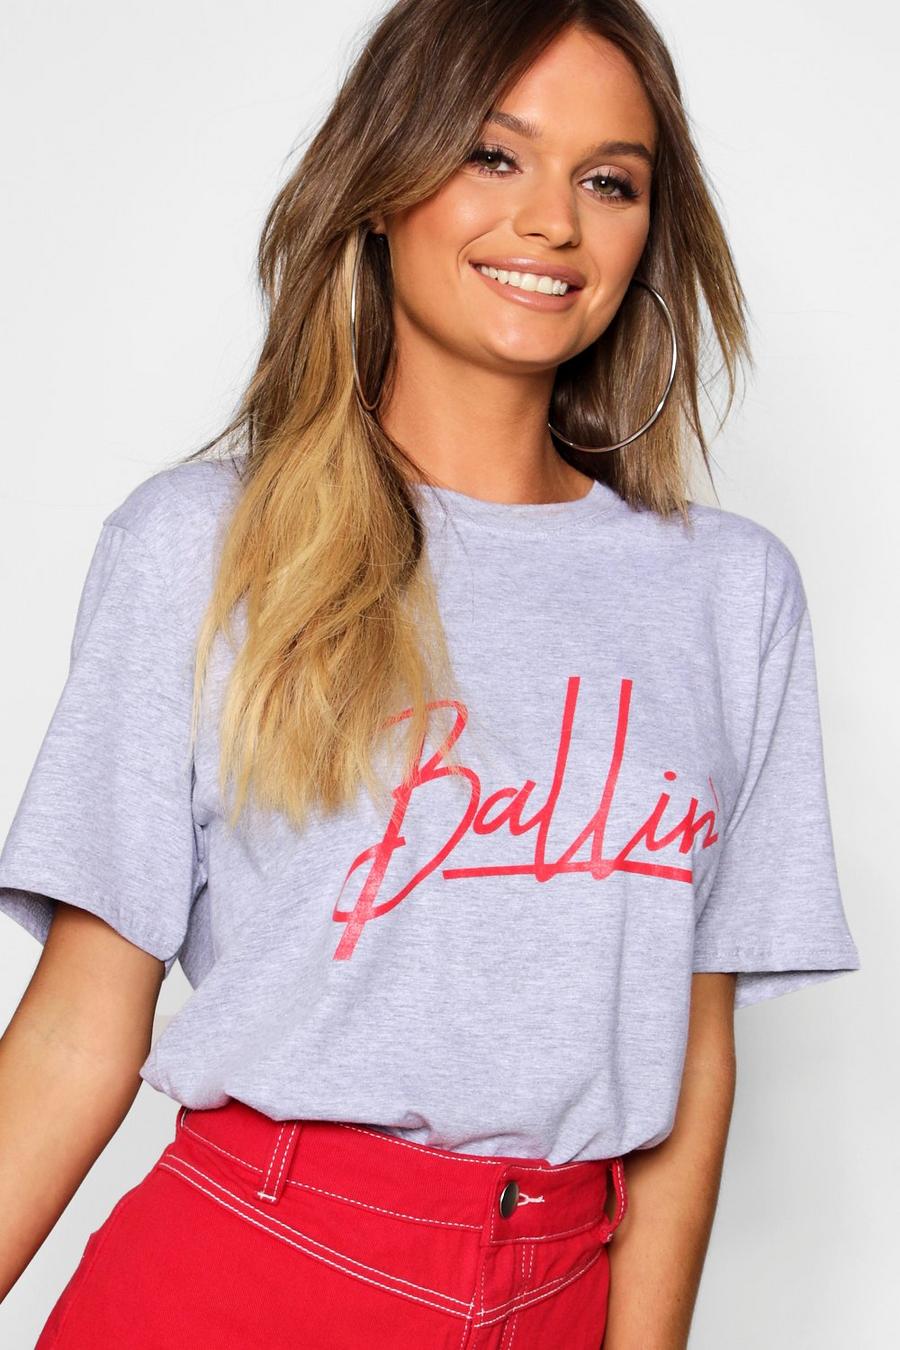 Camiseta extragrande con eslogan “Ballin”, Marga gris image number 1